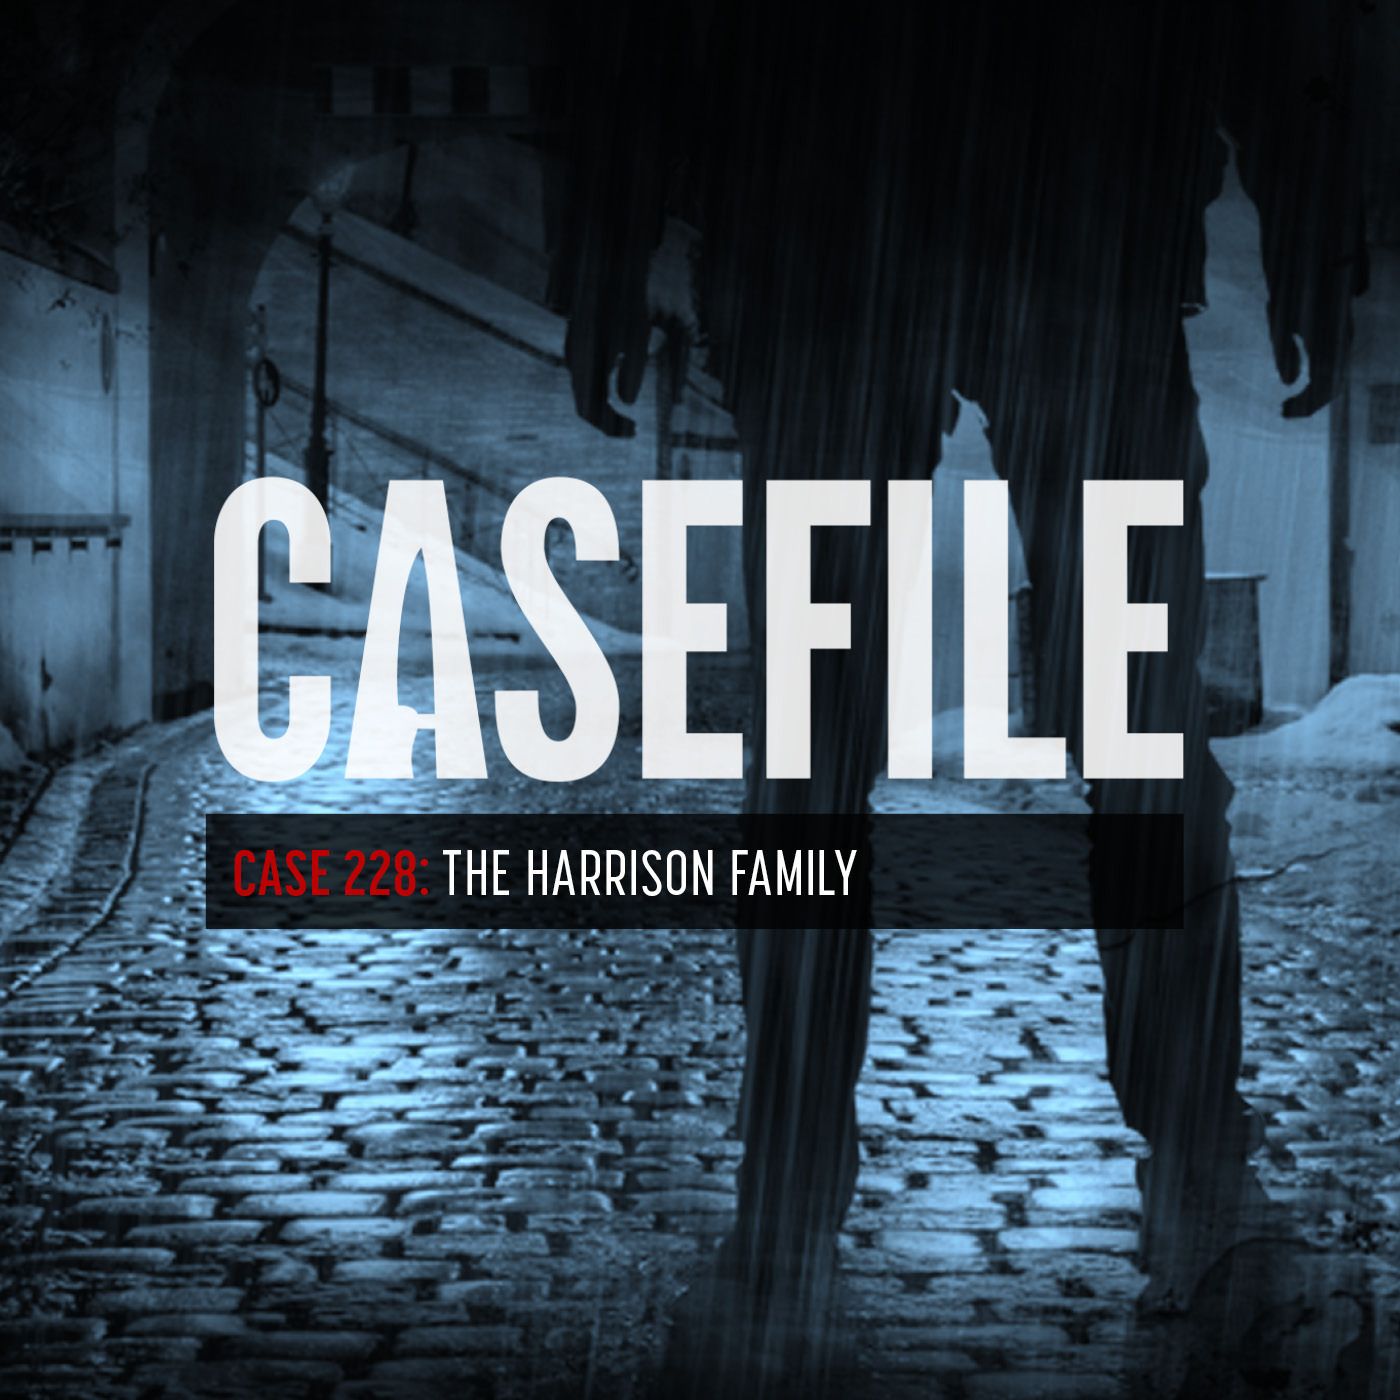 269: Case 228: The Harrison Family